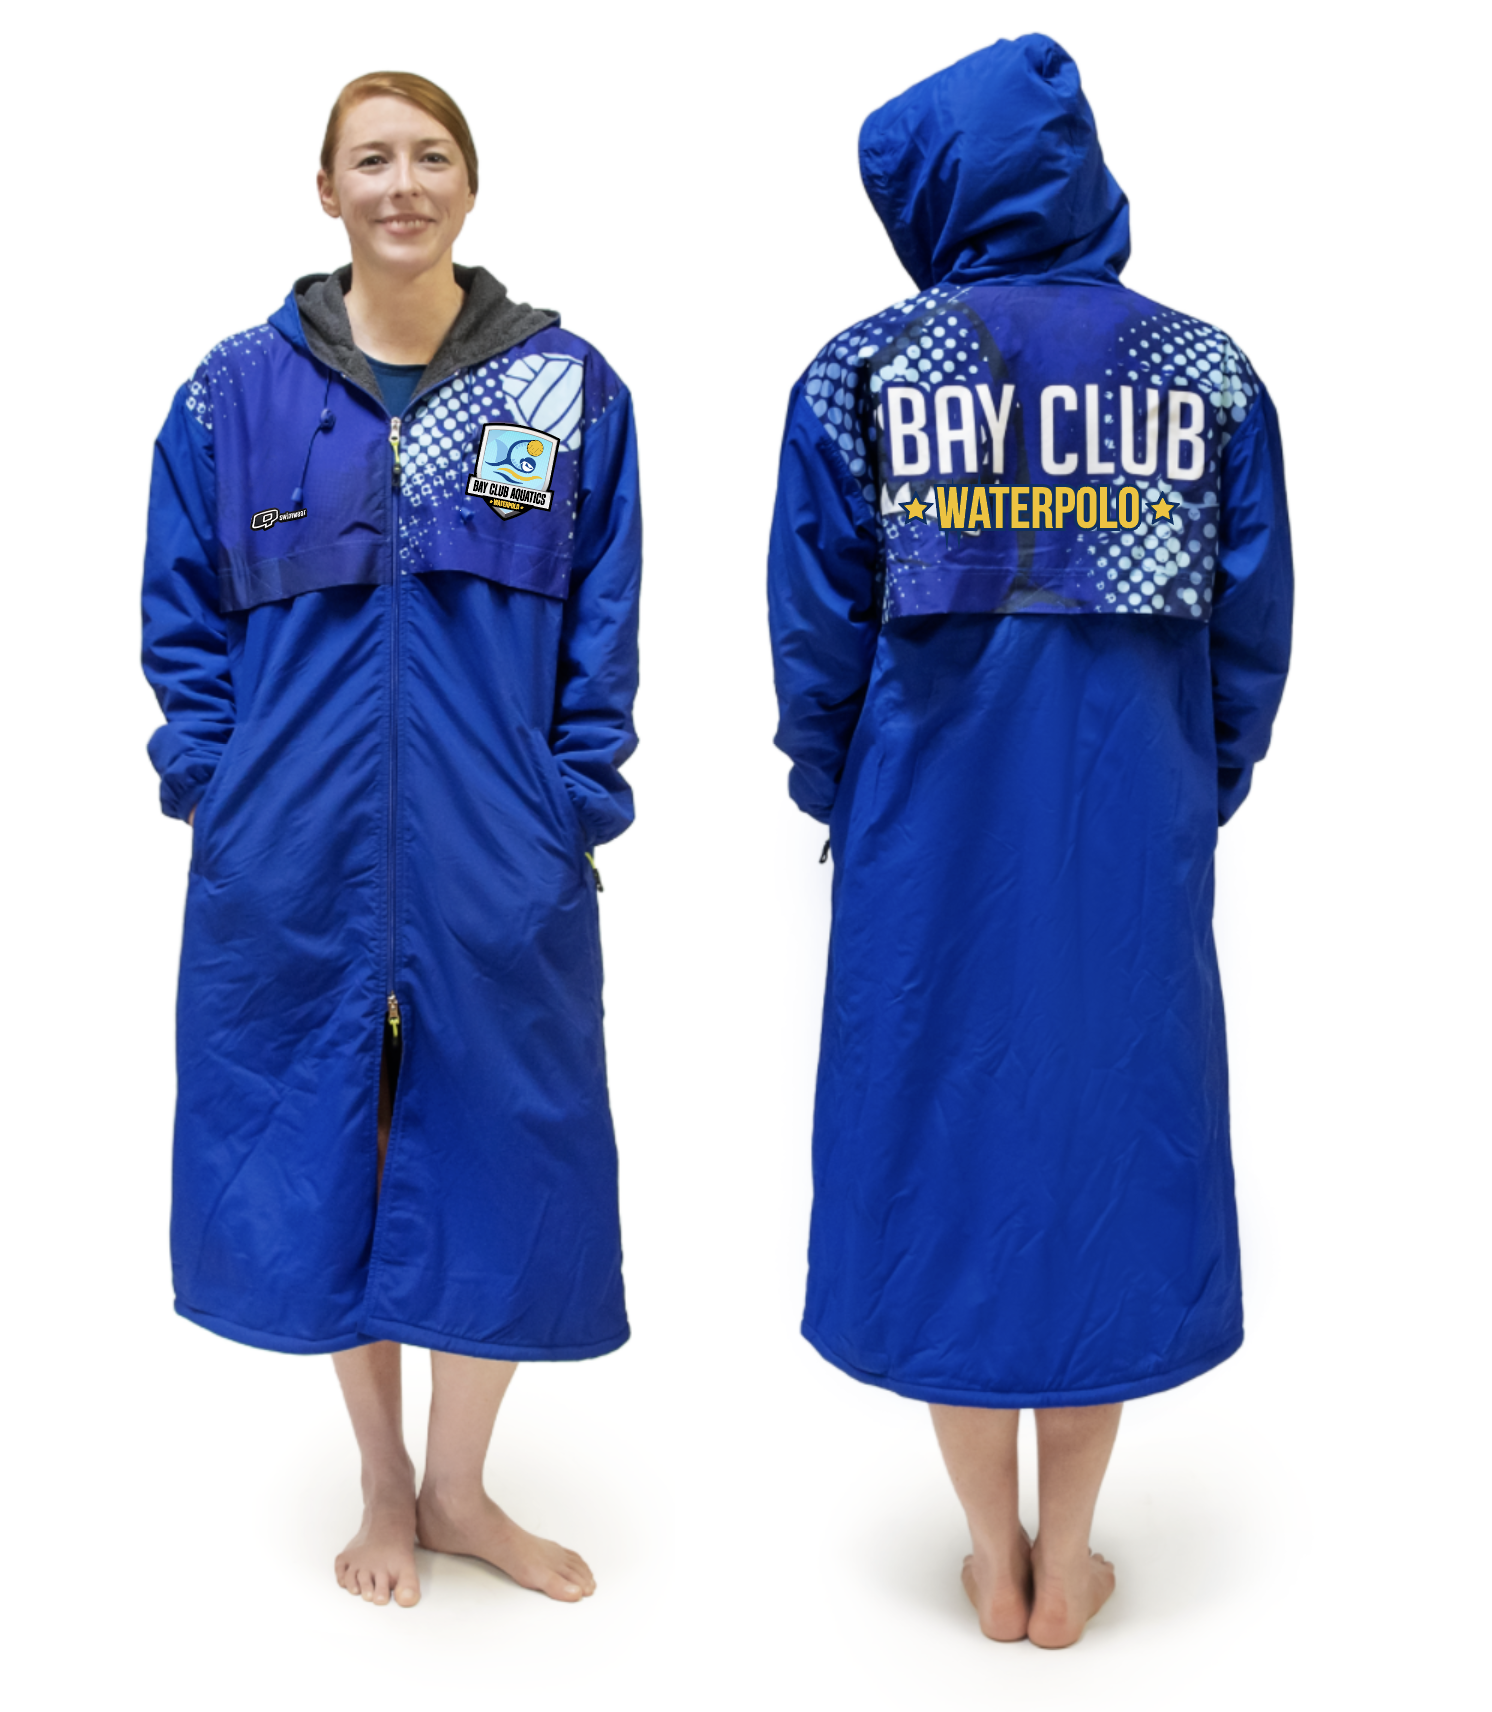 Tutublue - Swimsuits with UV Protection Shark Tank Season 7